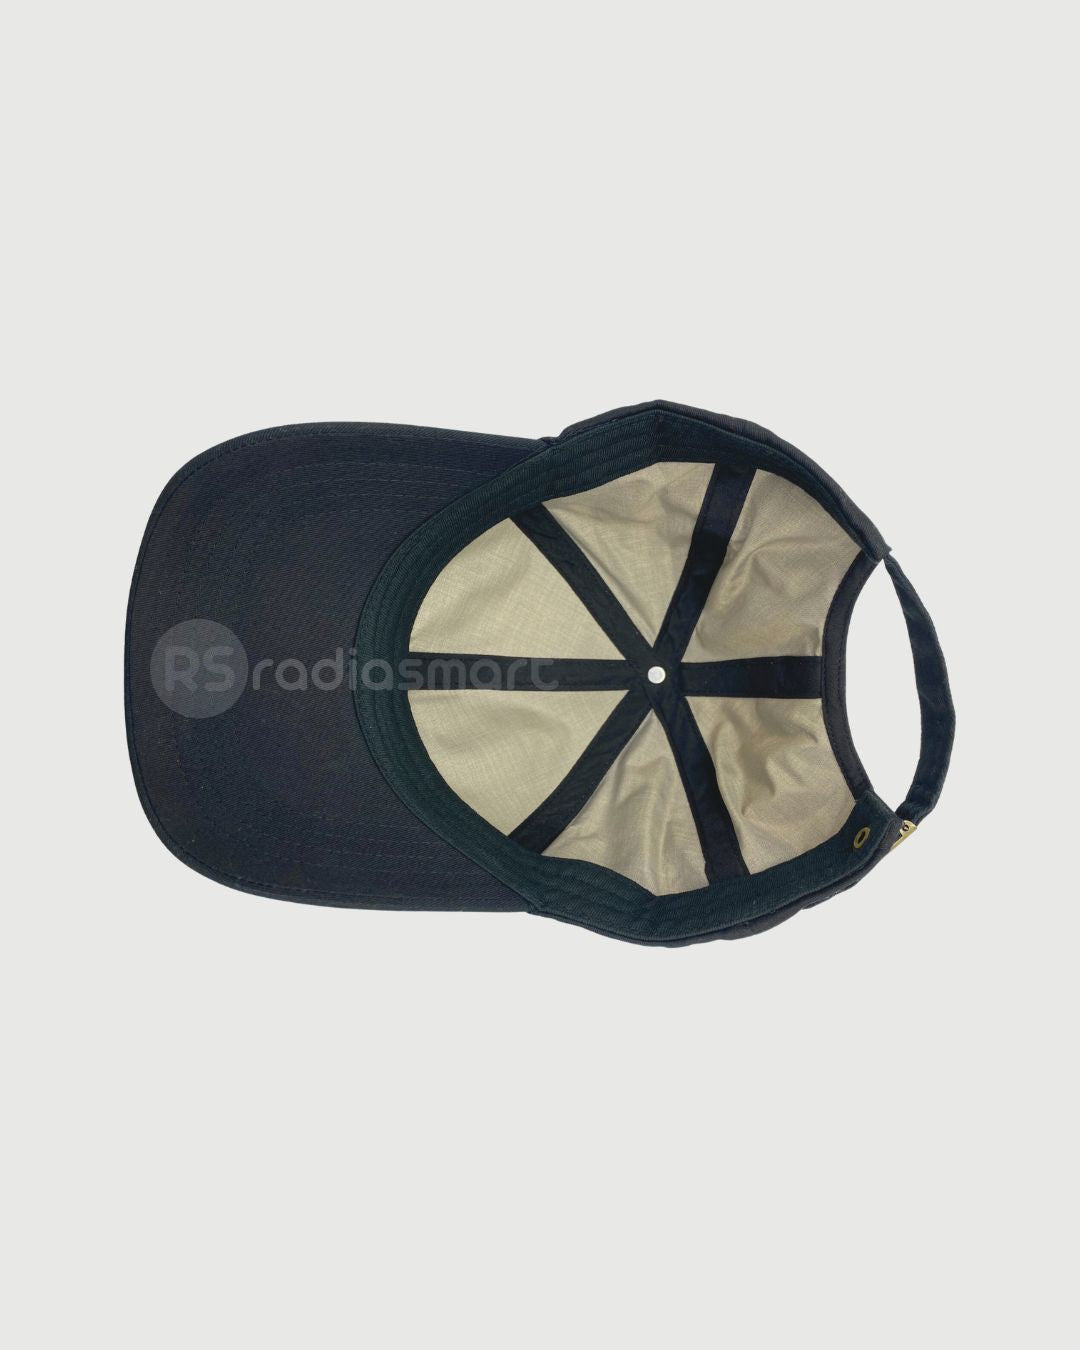 Radia Smart EMF Protection Hood, Faraday Hat, 5G Blocking, RF Shielding,  WiFi Shield, Brain Coat, Black